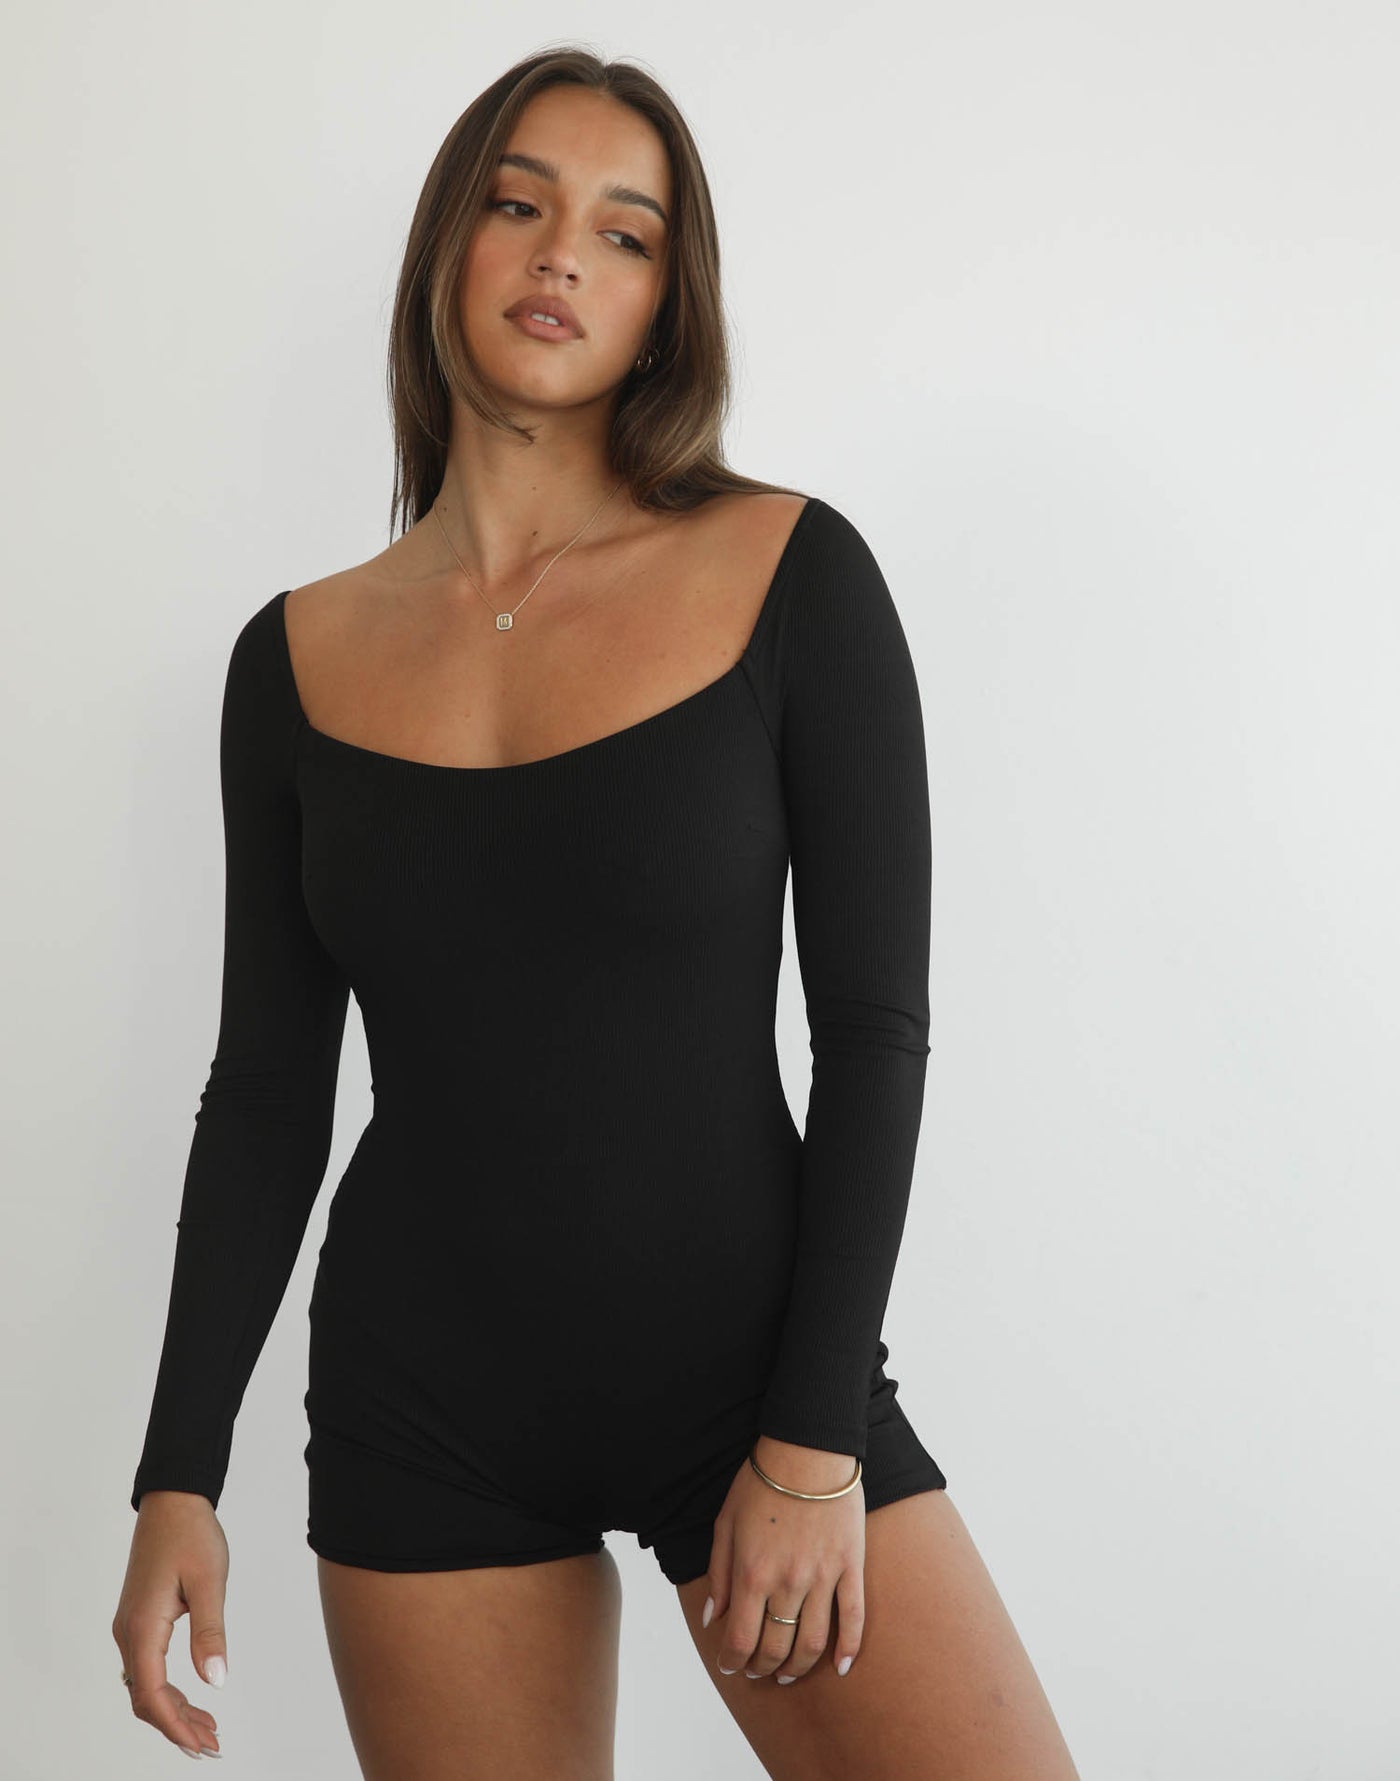 Diaz Playsuit (Black) - Long Sleeve Playsuit - Women's Playsuit - Charcoal Clothing